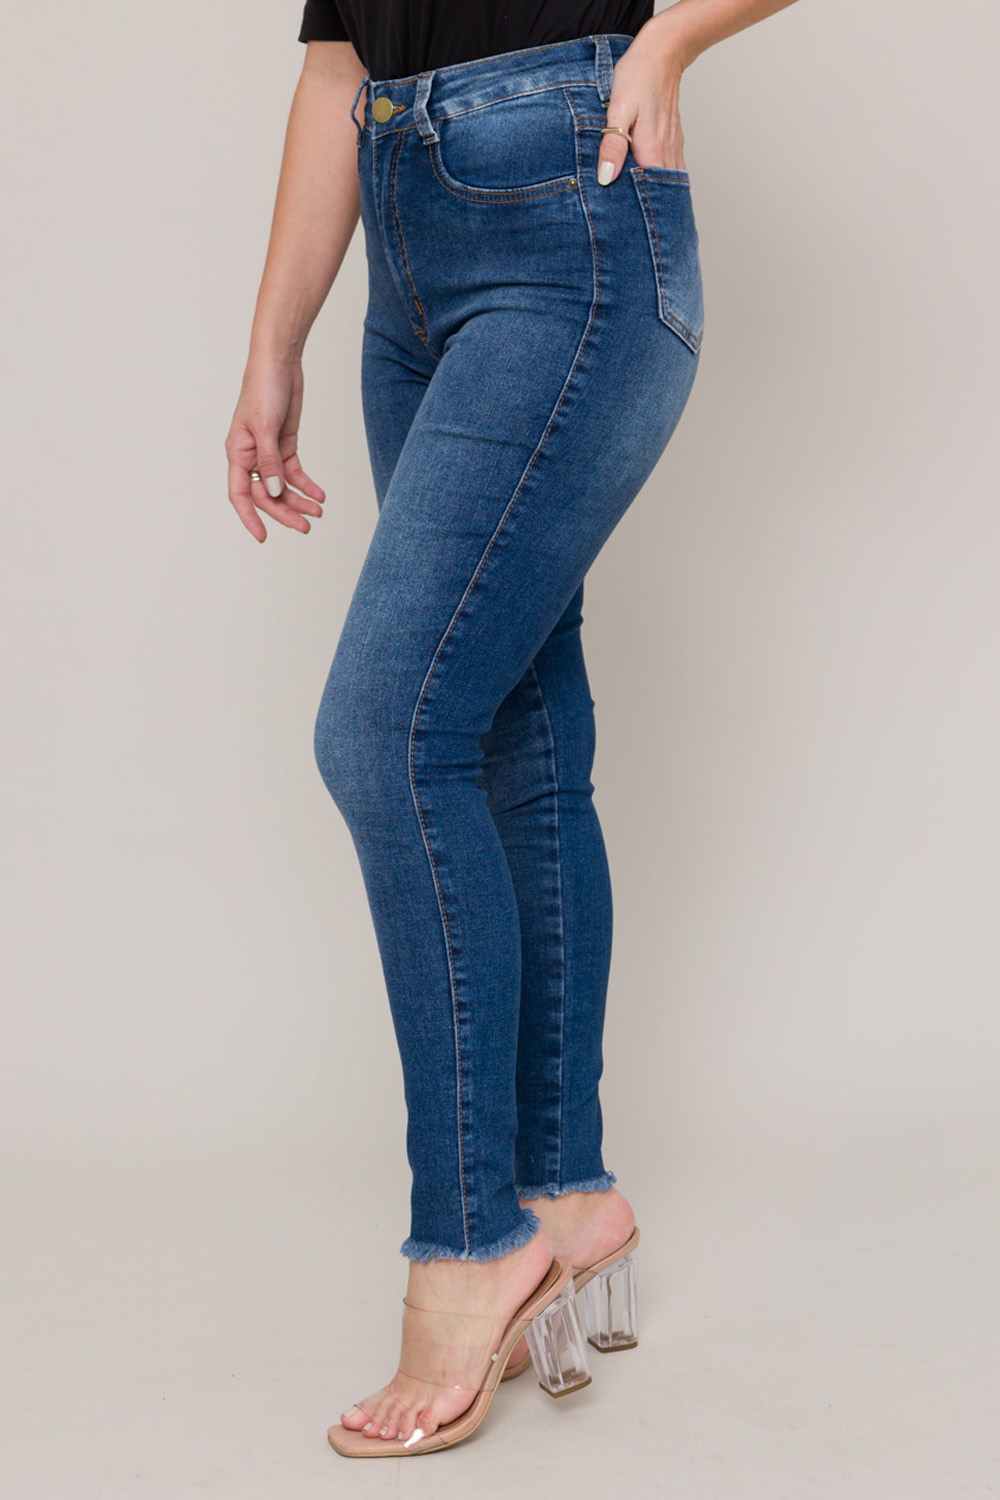 Calça Jeans Skinny Hot Pant Basic 11649 - Jeans Médio 2